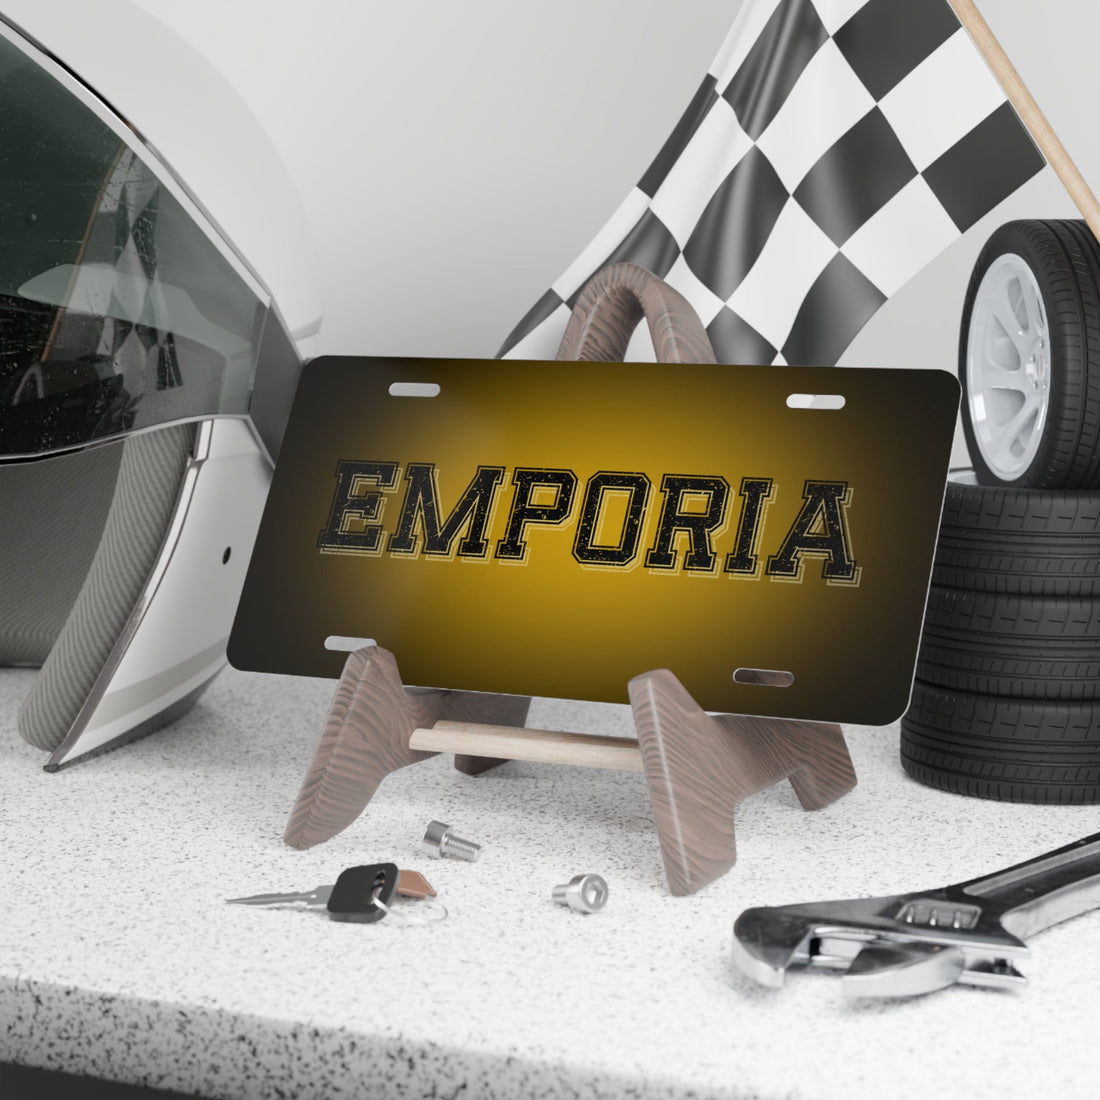 Emporia Vanity Plate - Accessories - Positively Sassy - Emporia Vanity Plate